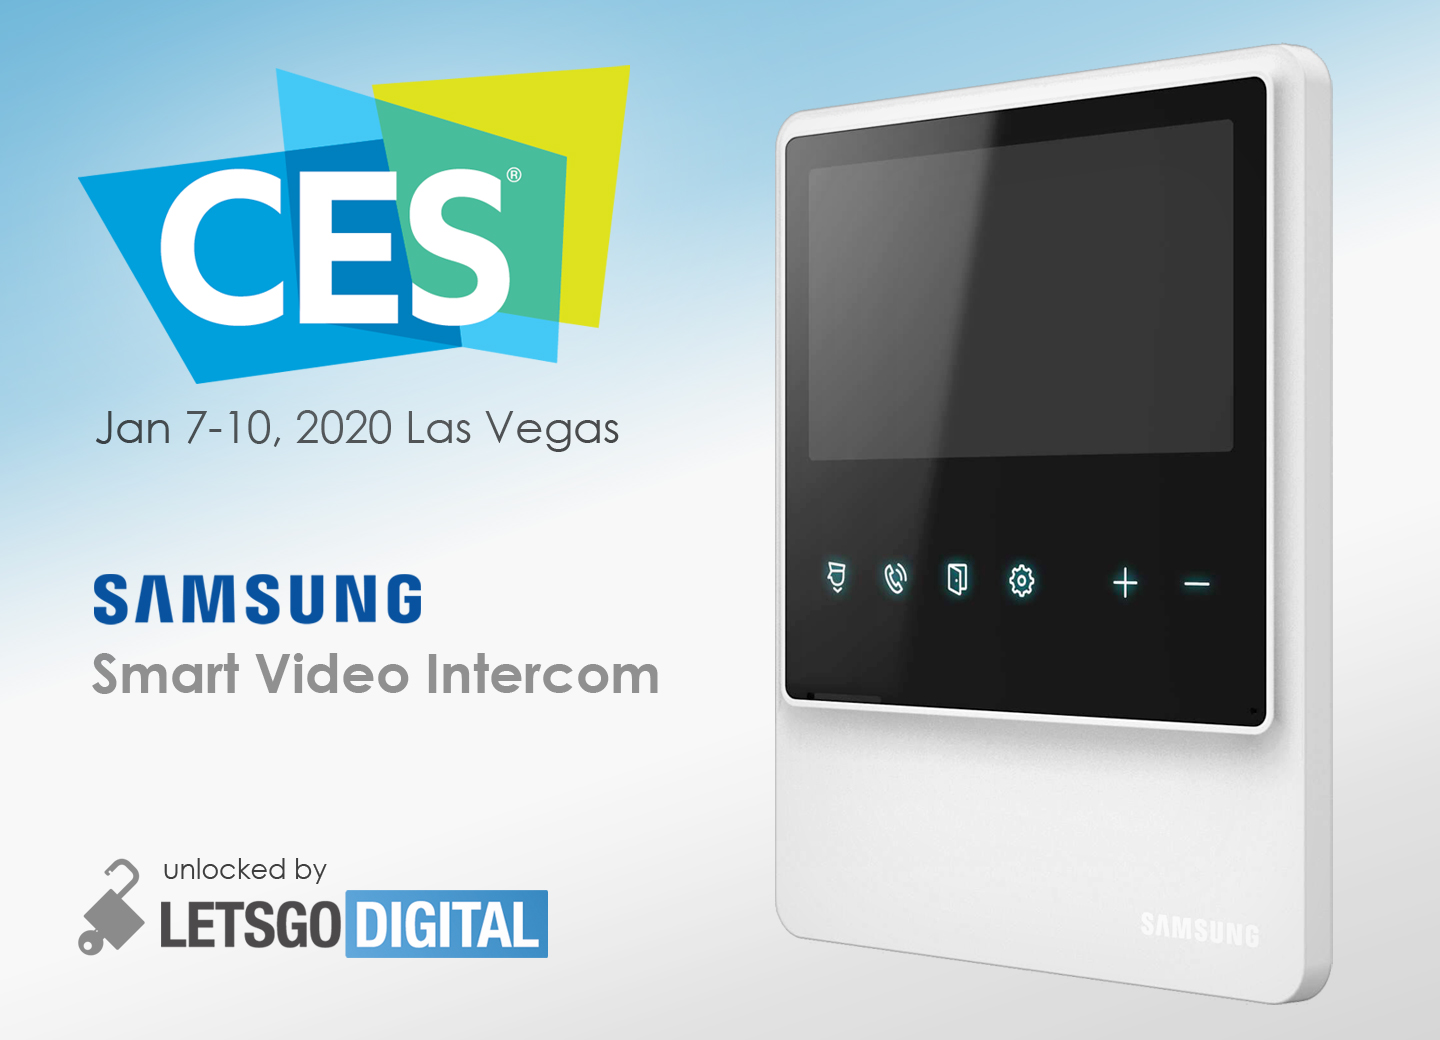 Samsung smart video intercom